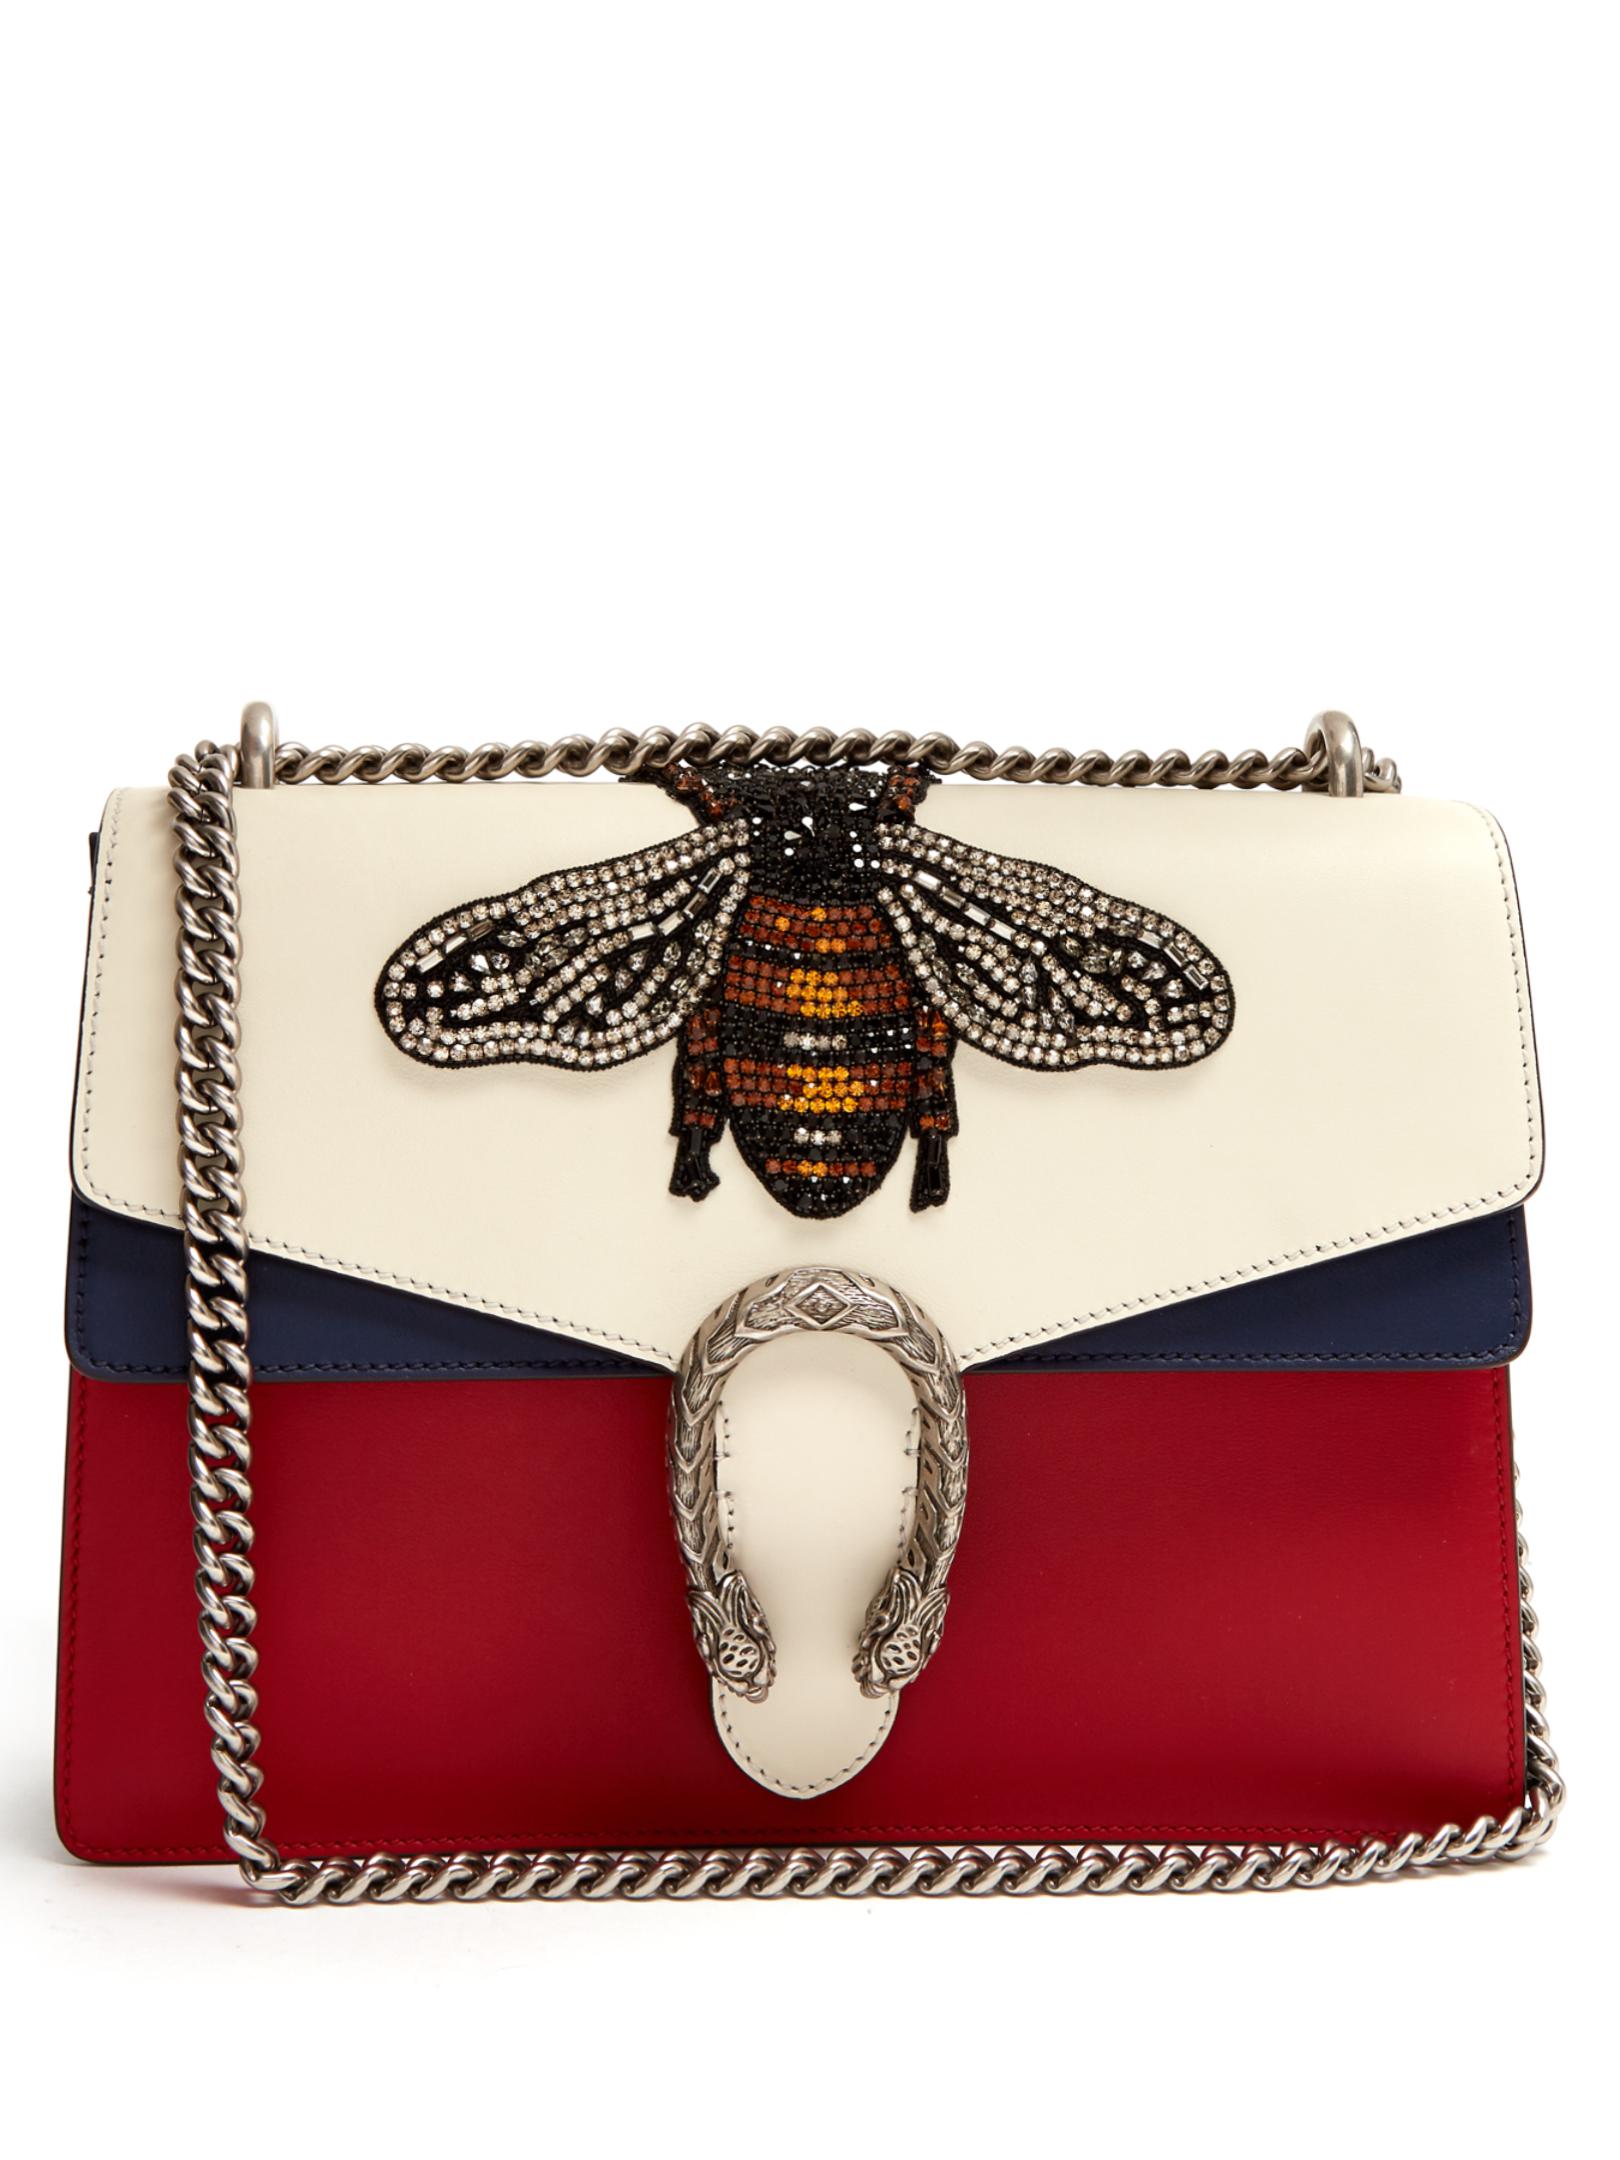 Lyst - Gucci Dionysus Large Bee Appliqué Leather Shoulder Bag